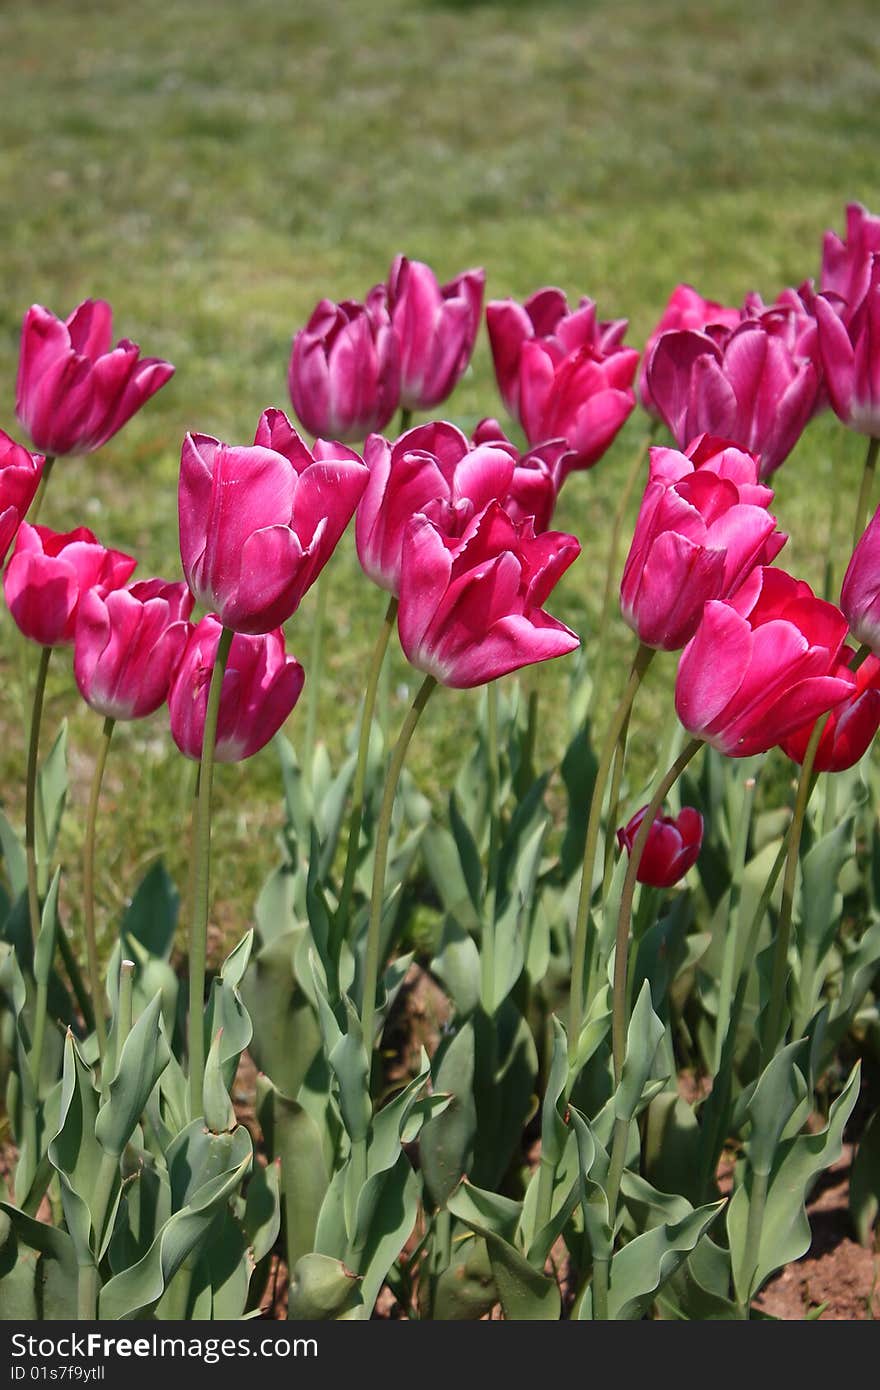 Pink Tulips Vertical Version. Color image